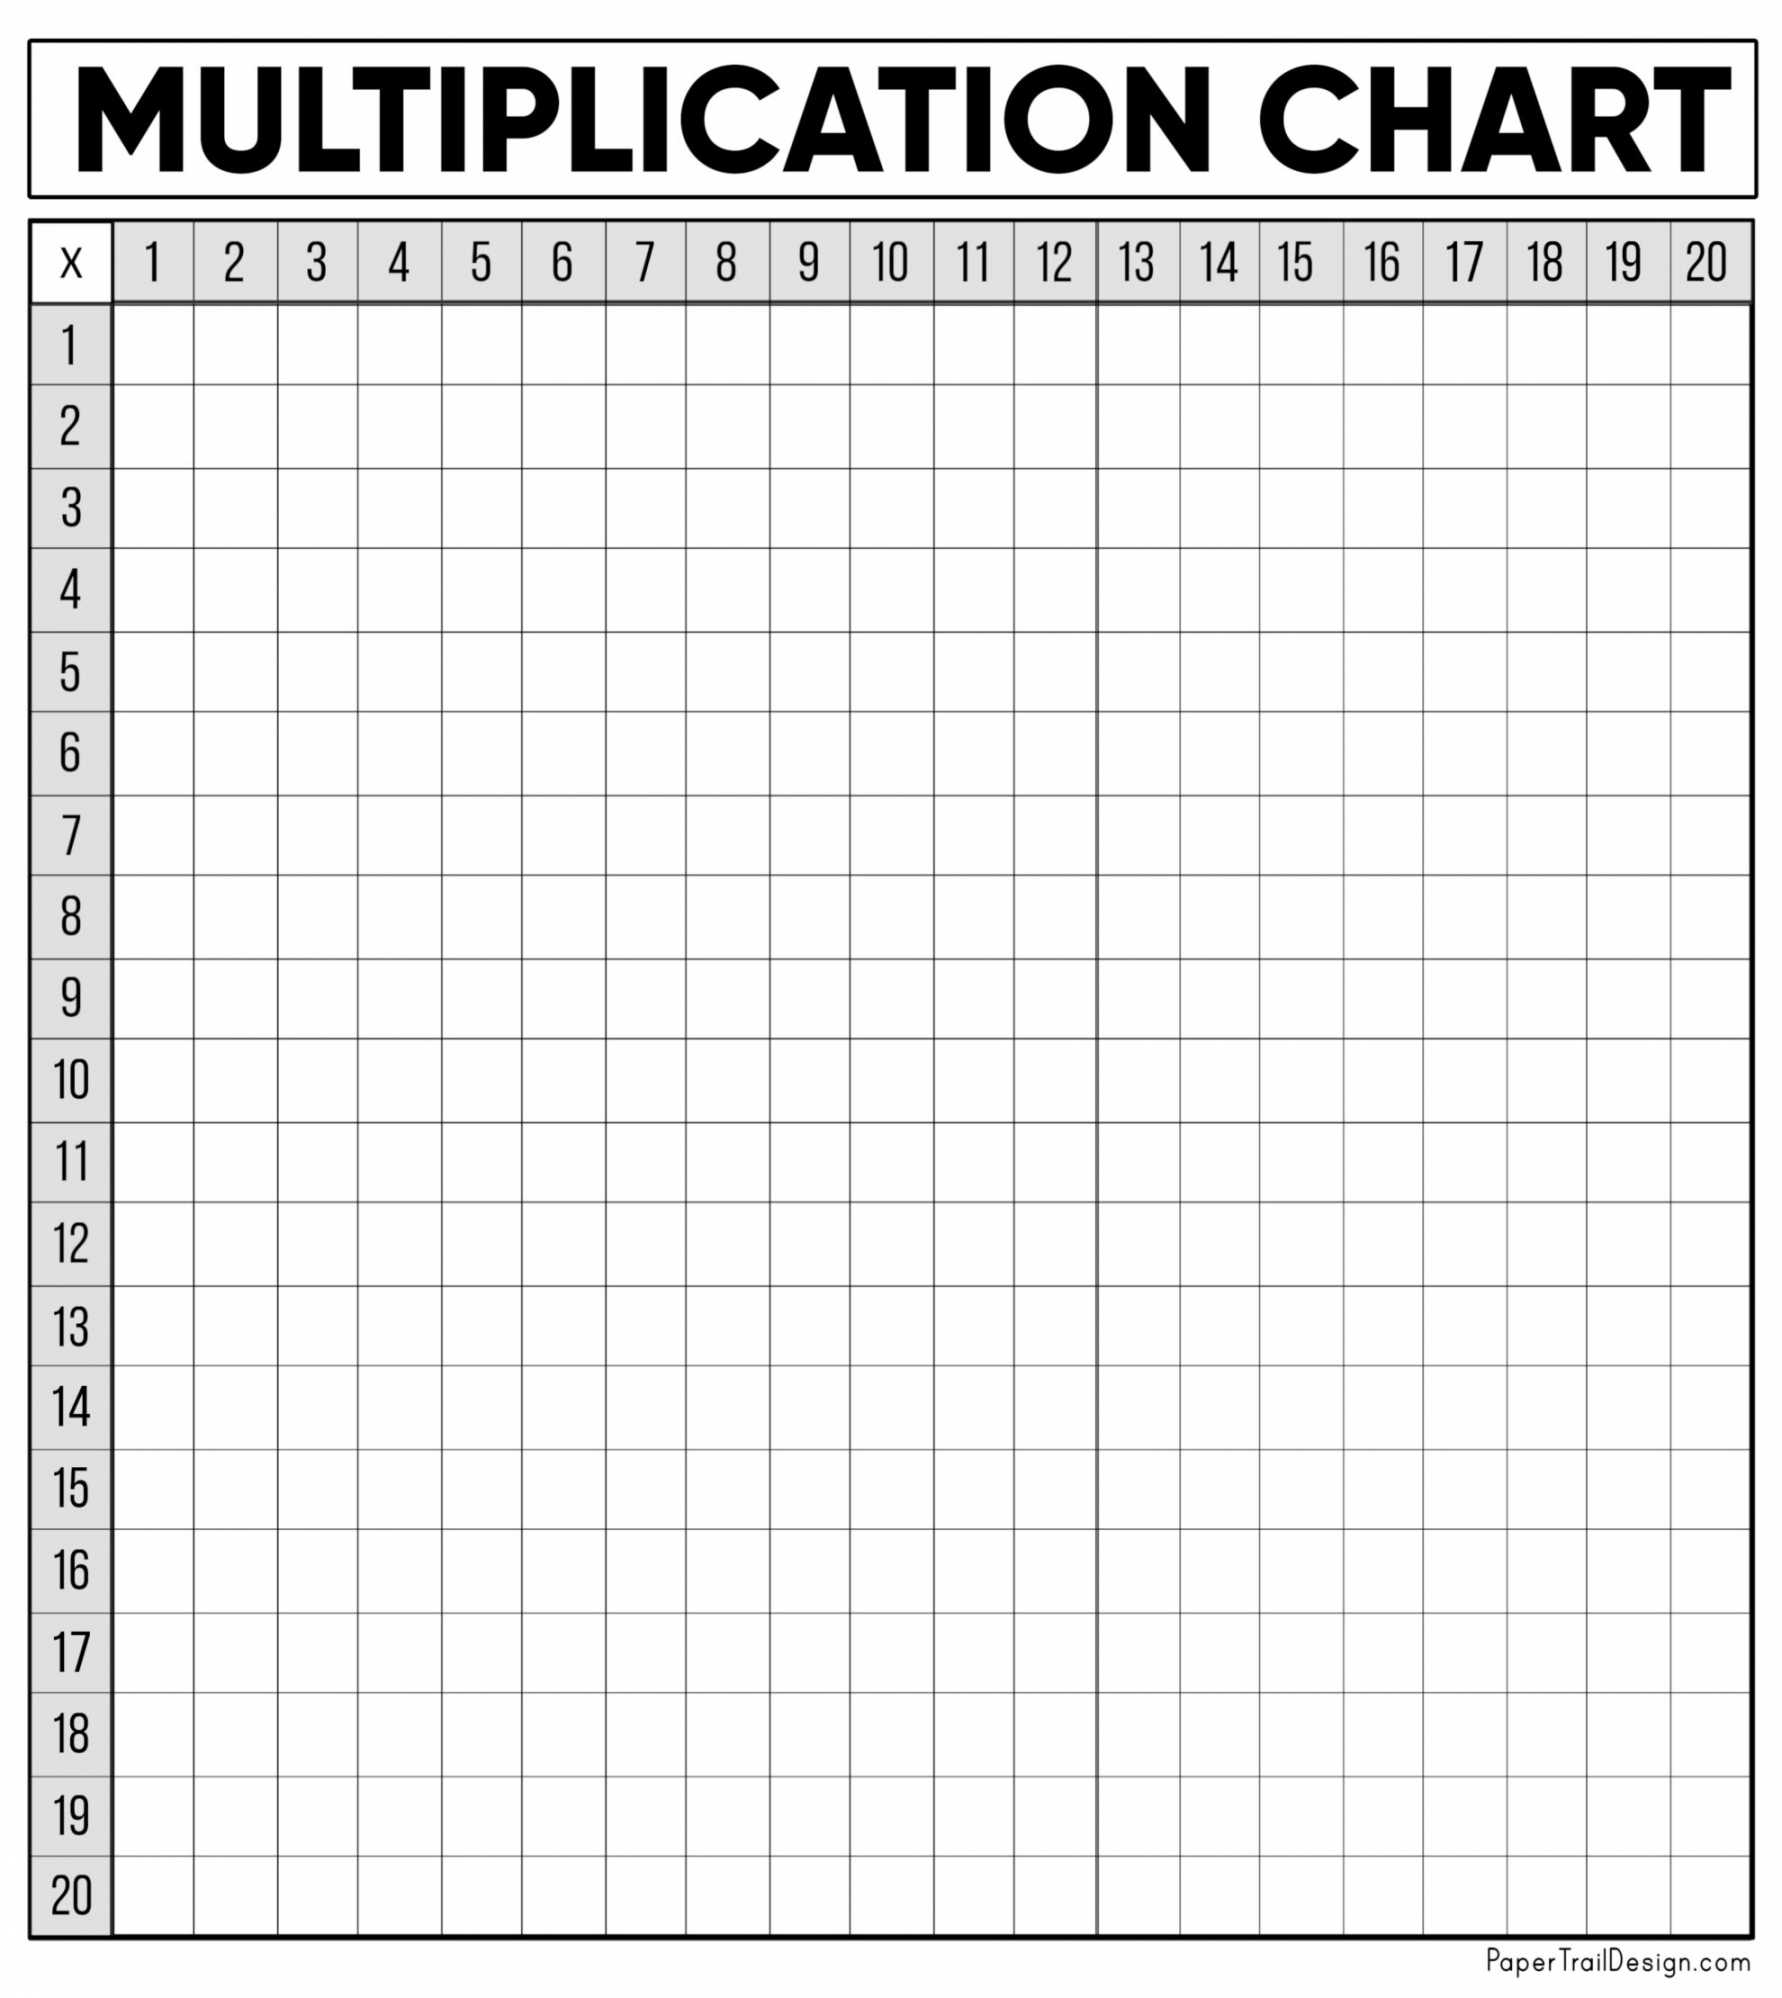 Free Multiplication Chart Printable - Paper Trail Design - FREE Printables - Multiplication Table Blank Printable